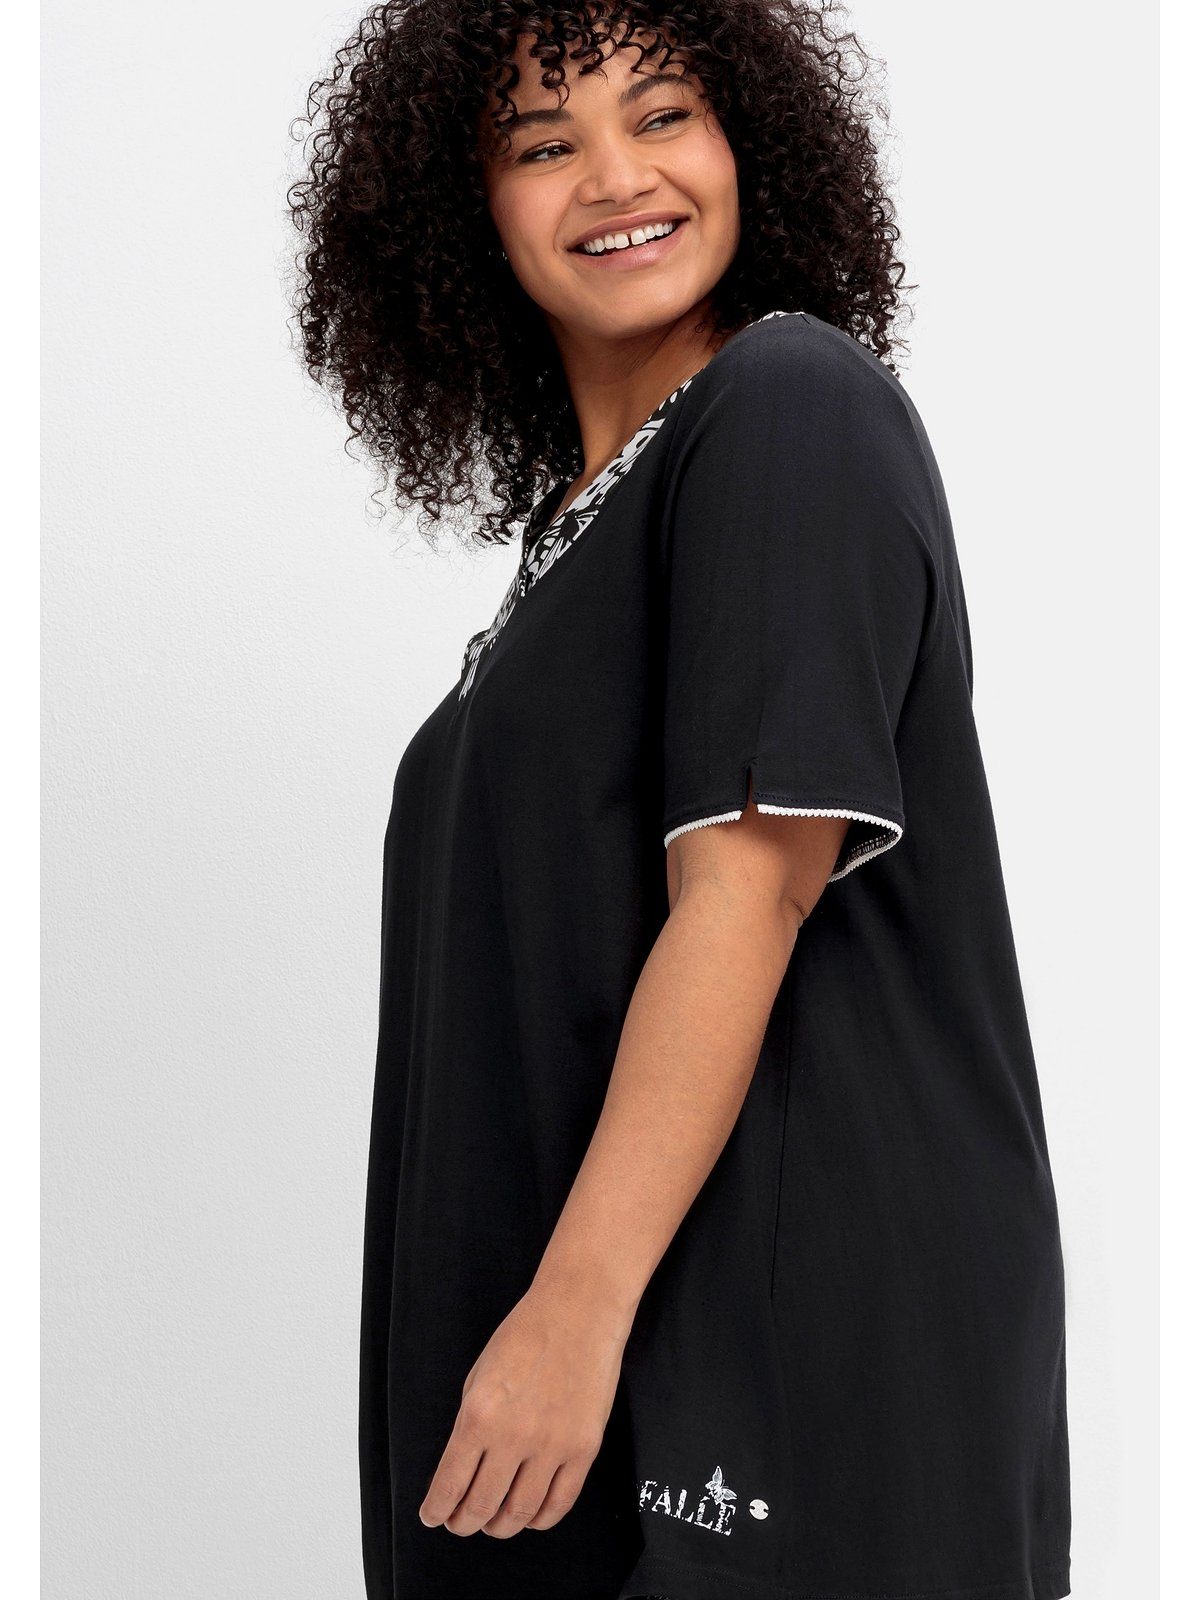 Sheego Große am mit bedruckt Größen schwarz Longshirt breiter Blende V-Ausschnitt